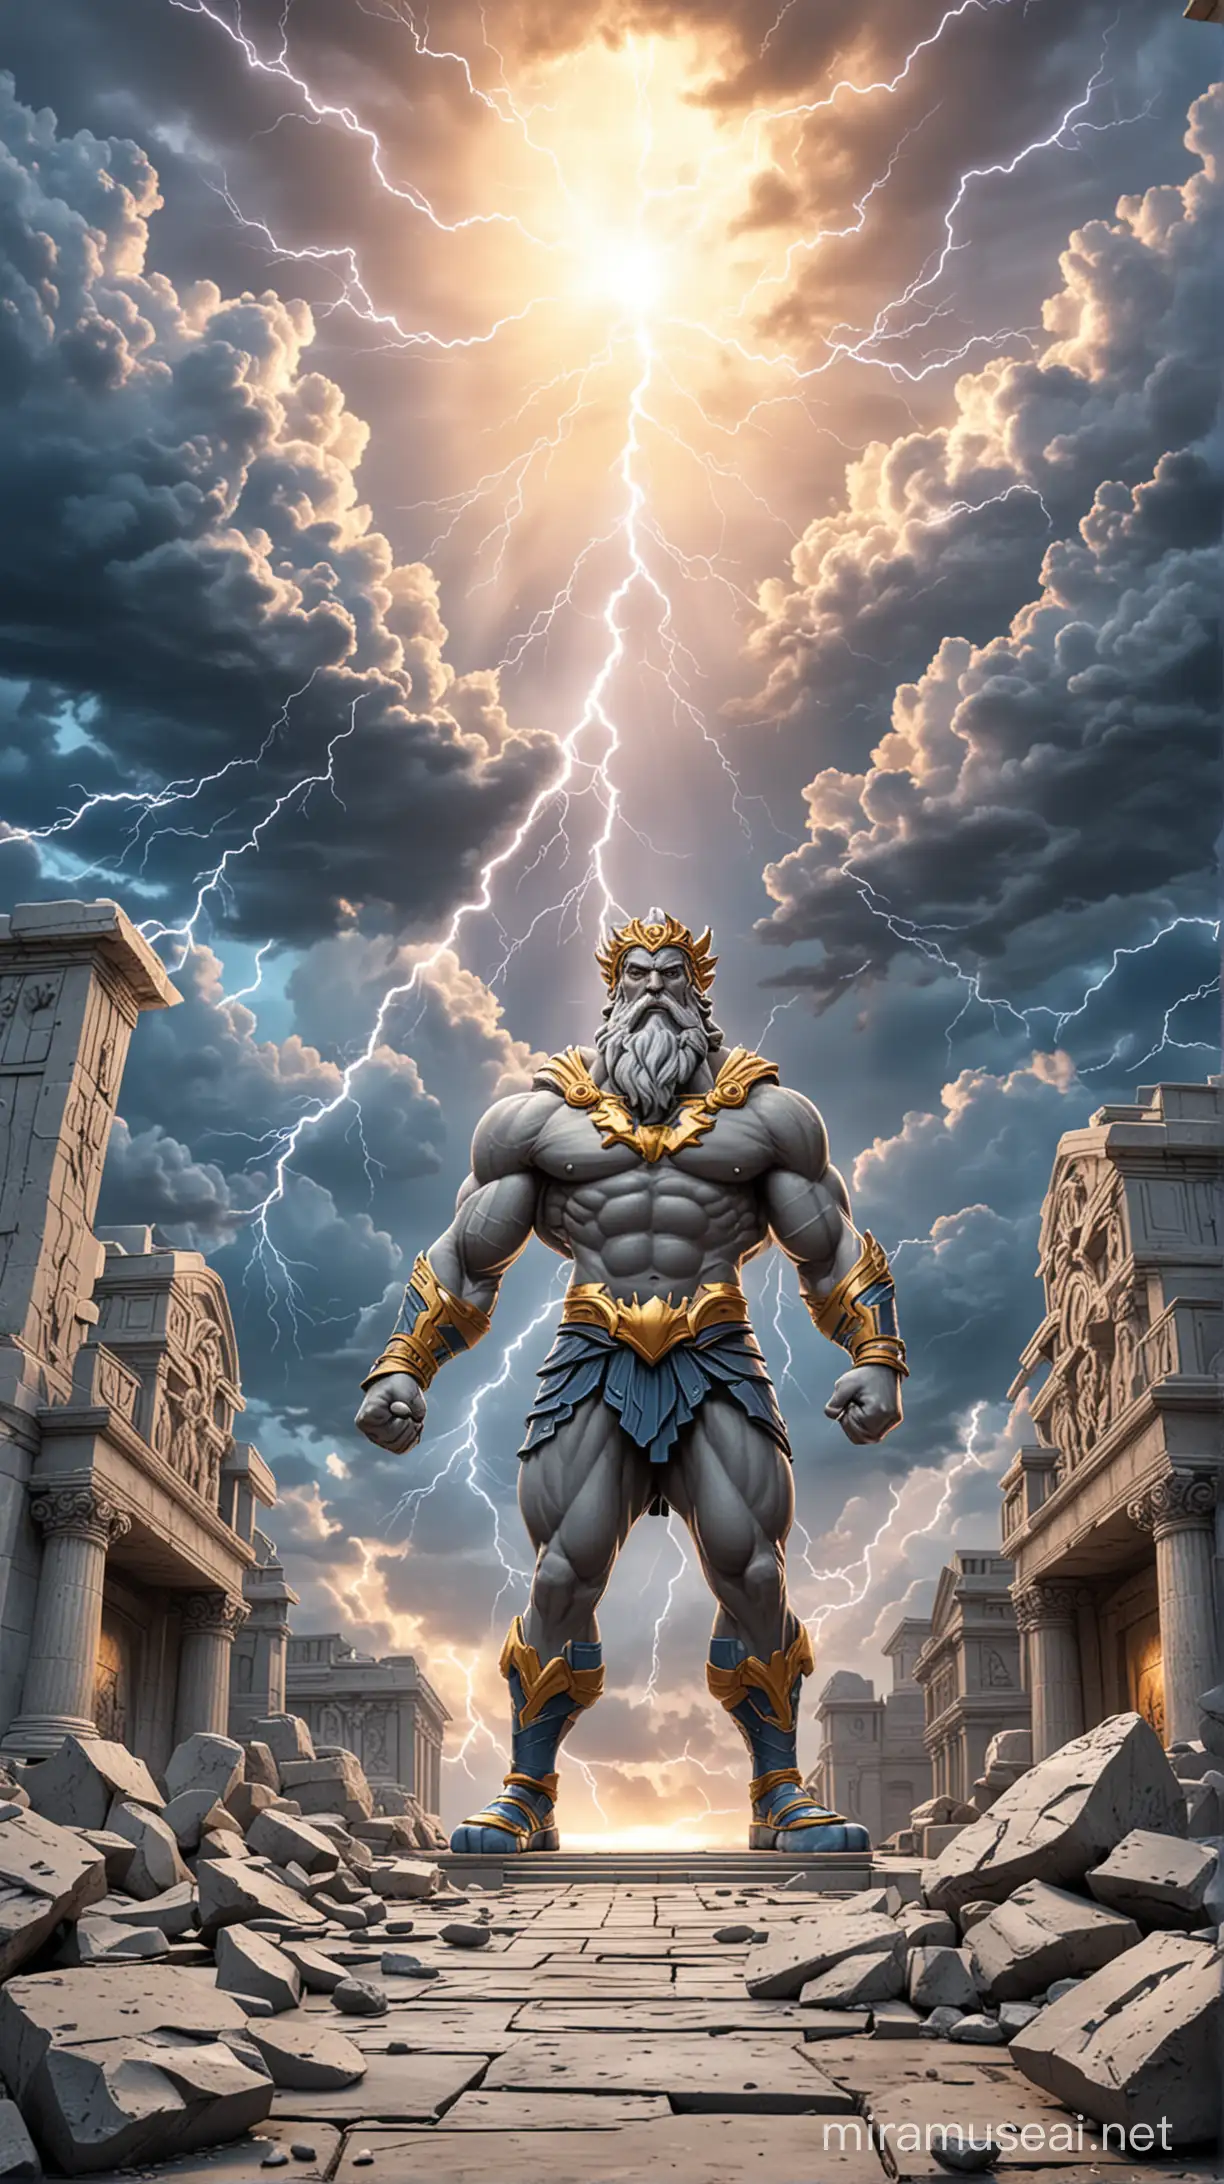 Cartoon background on zeus, beton, lightning and sky  theme